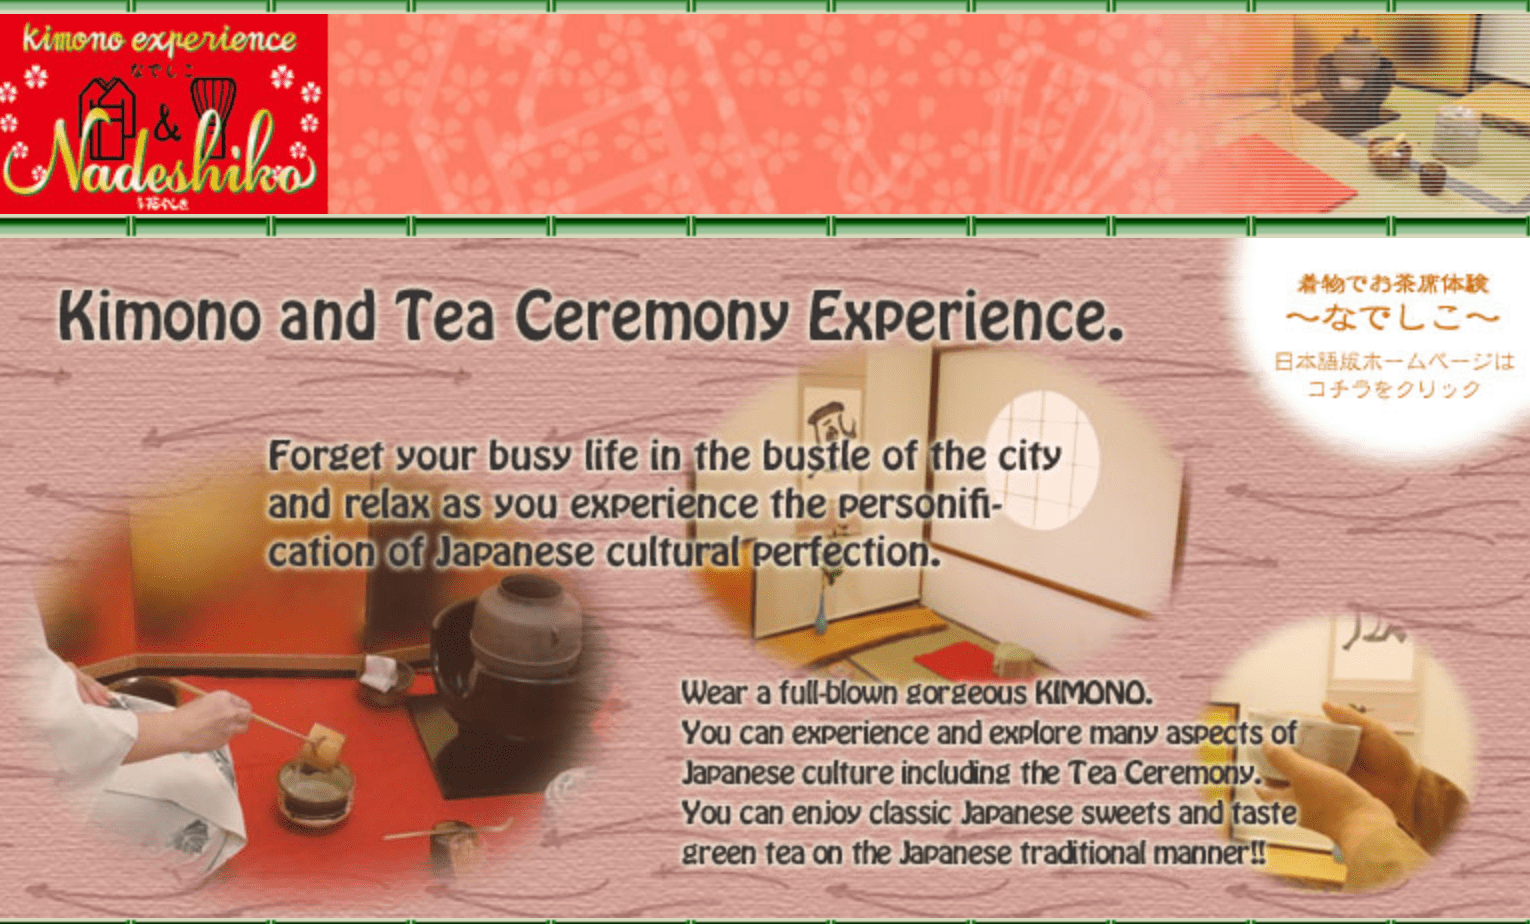 Nadeshiko Tea Ceremony